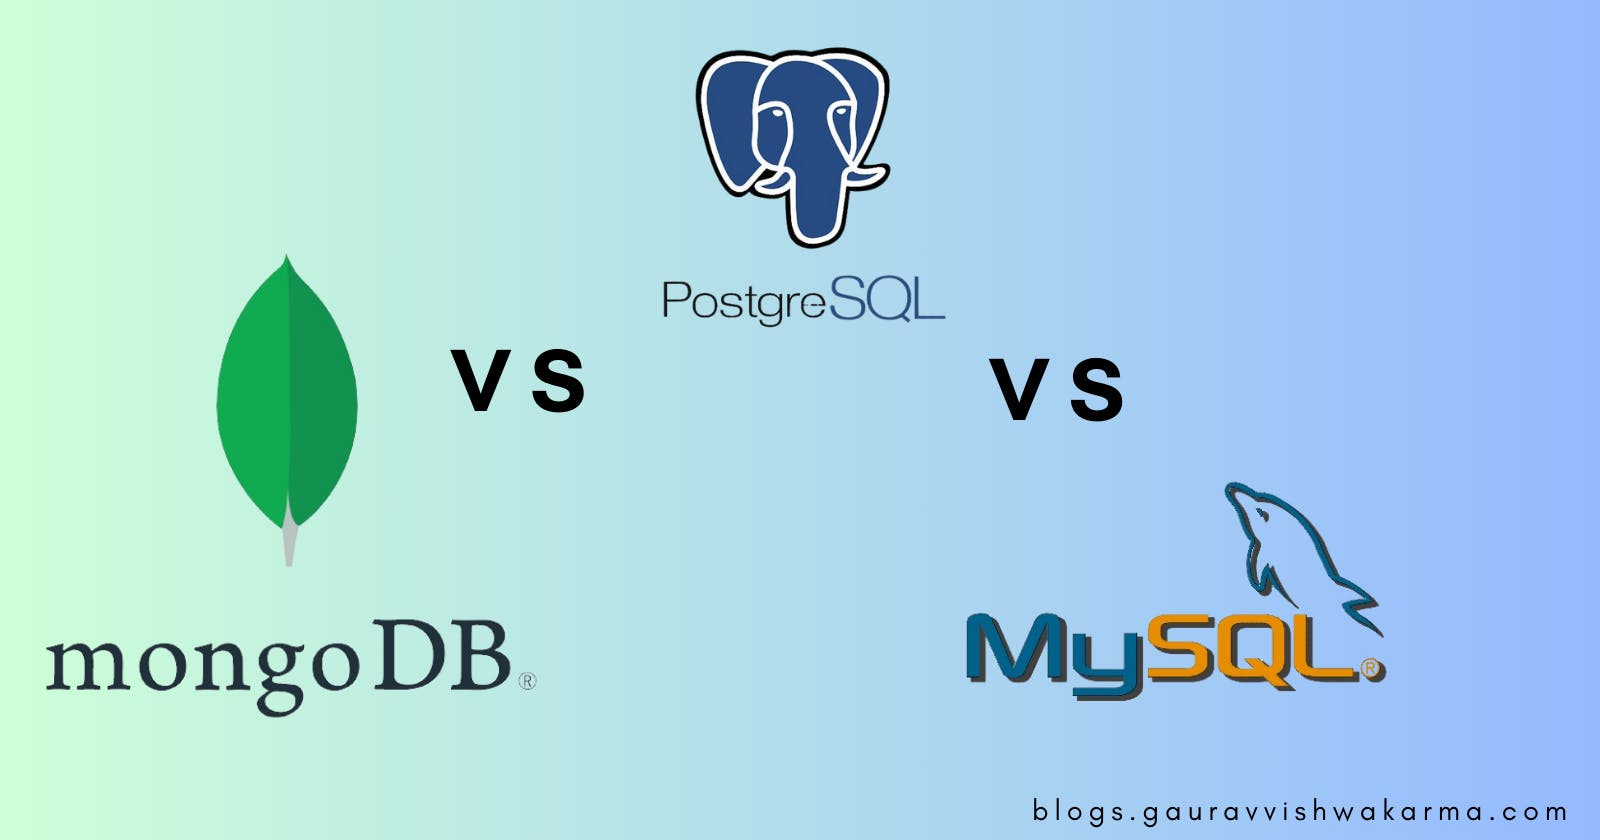 PostgreSQL: The SQL Stalwart Still Shines in a NoSQL World